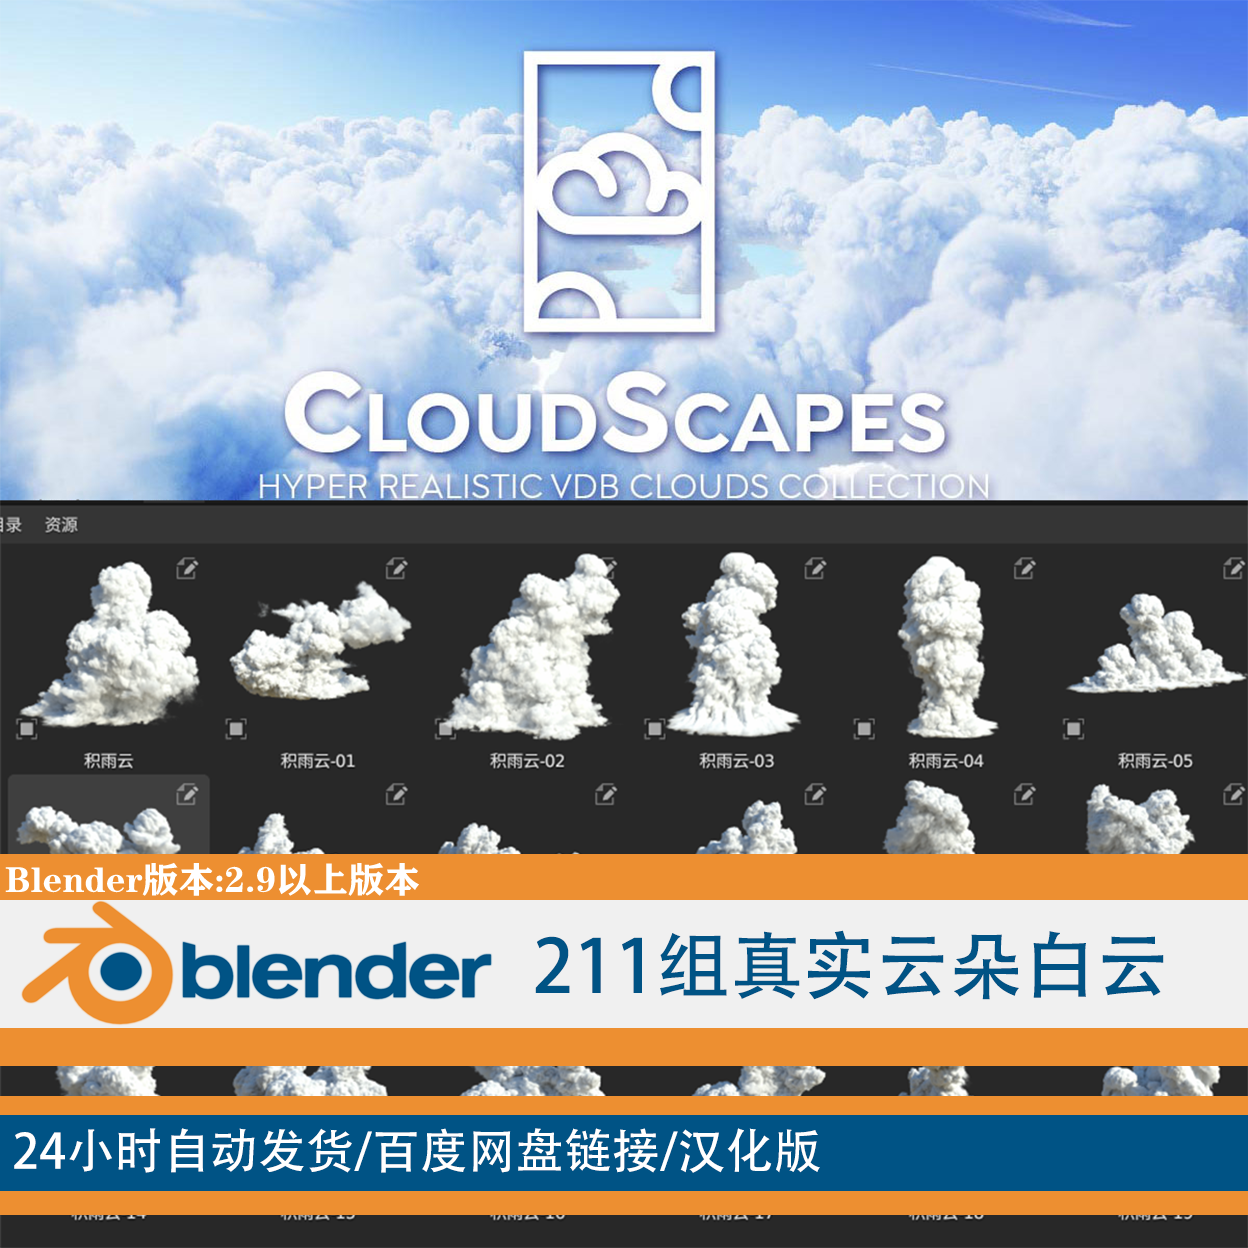 [Blender] 211组Blender真实云朵白云VDB模型 已汉化 资产库 商务/设计服务 设计素材/源文件 原图主图